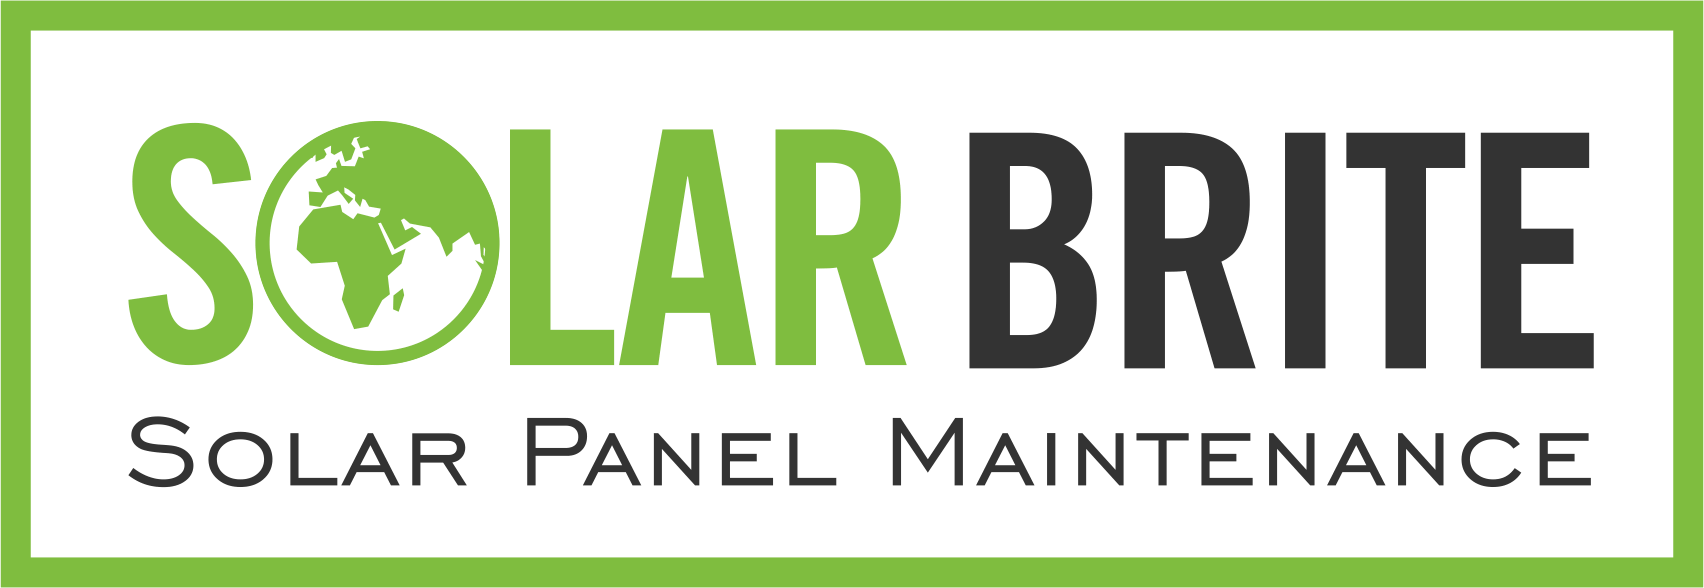 Brite Logo - Solar Brite | Solar Panel Cleaning & Maintenance